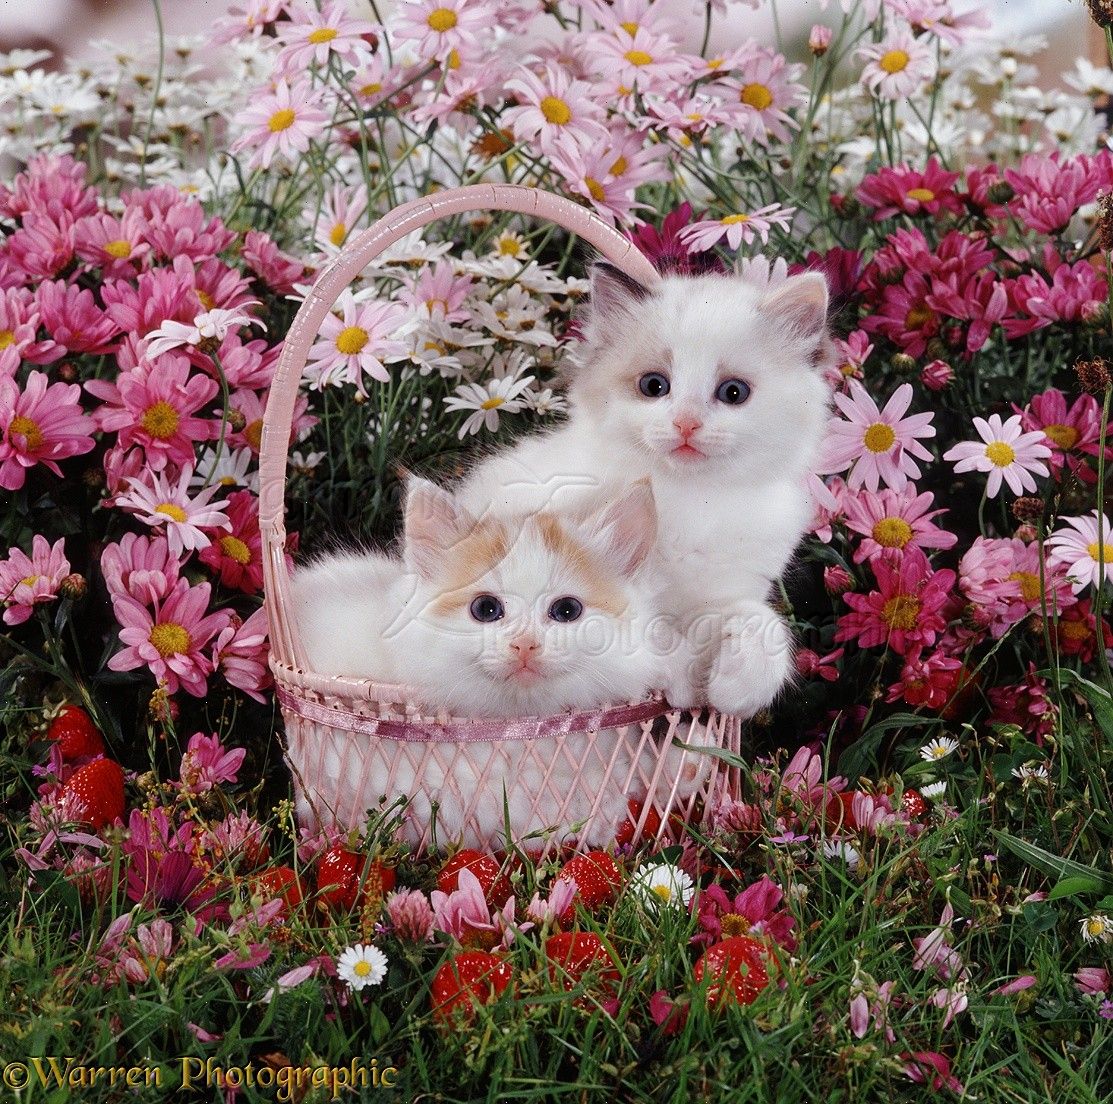 Kittens and Flowers Wallpaper